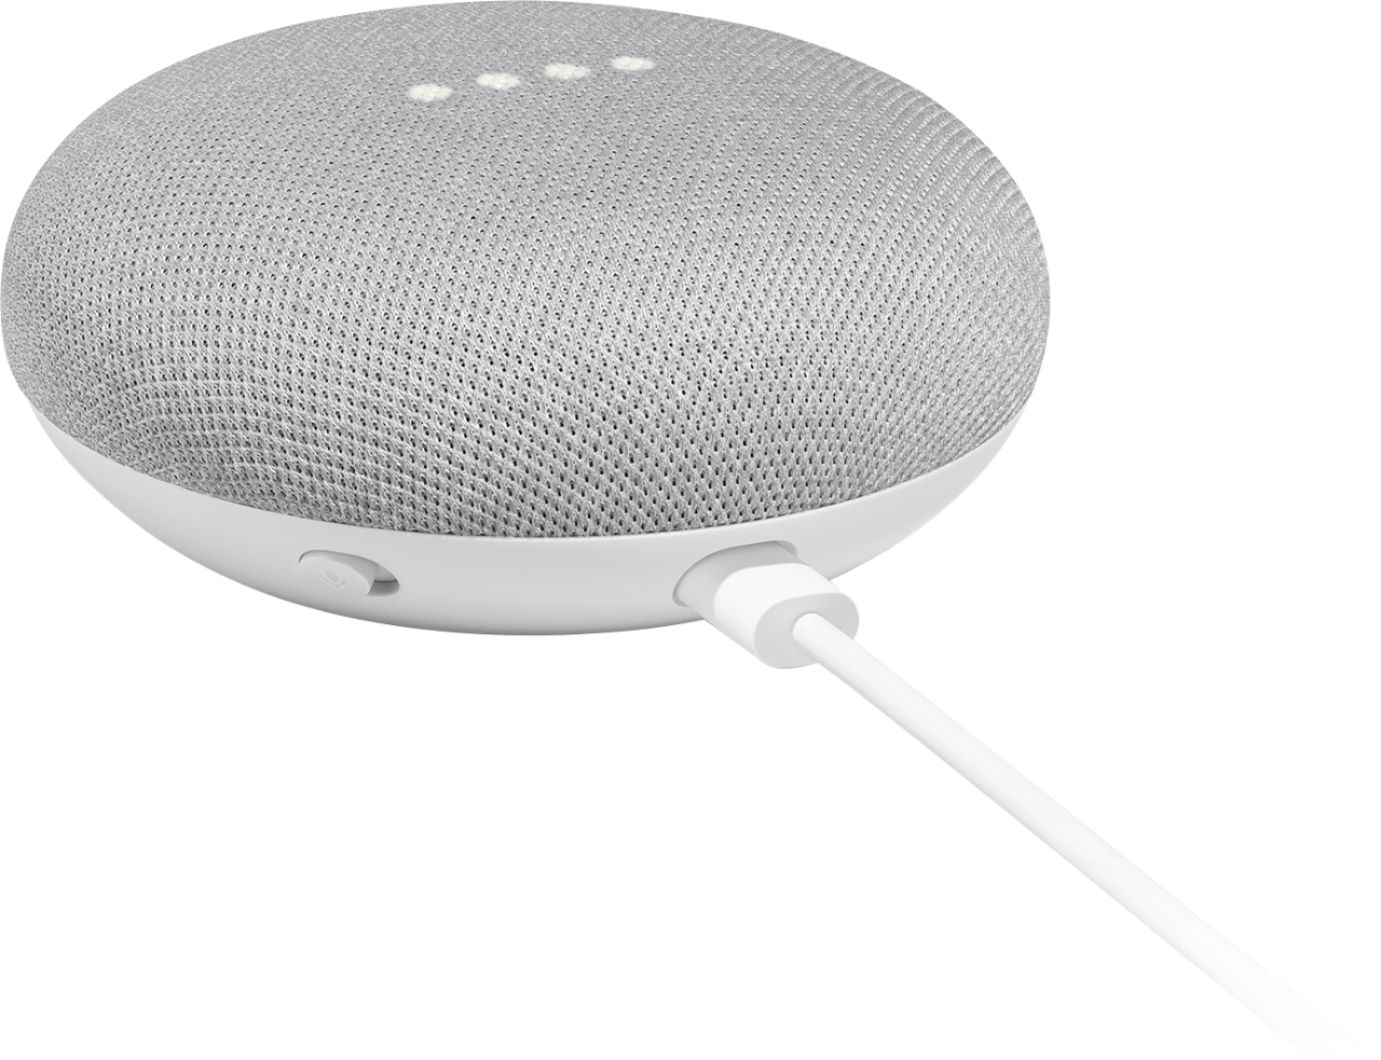 Google Home Google Assistant Chalk White Hands Free Smart Speaker 